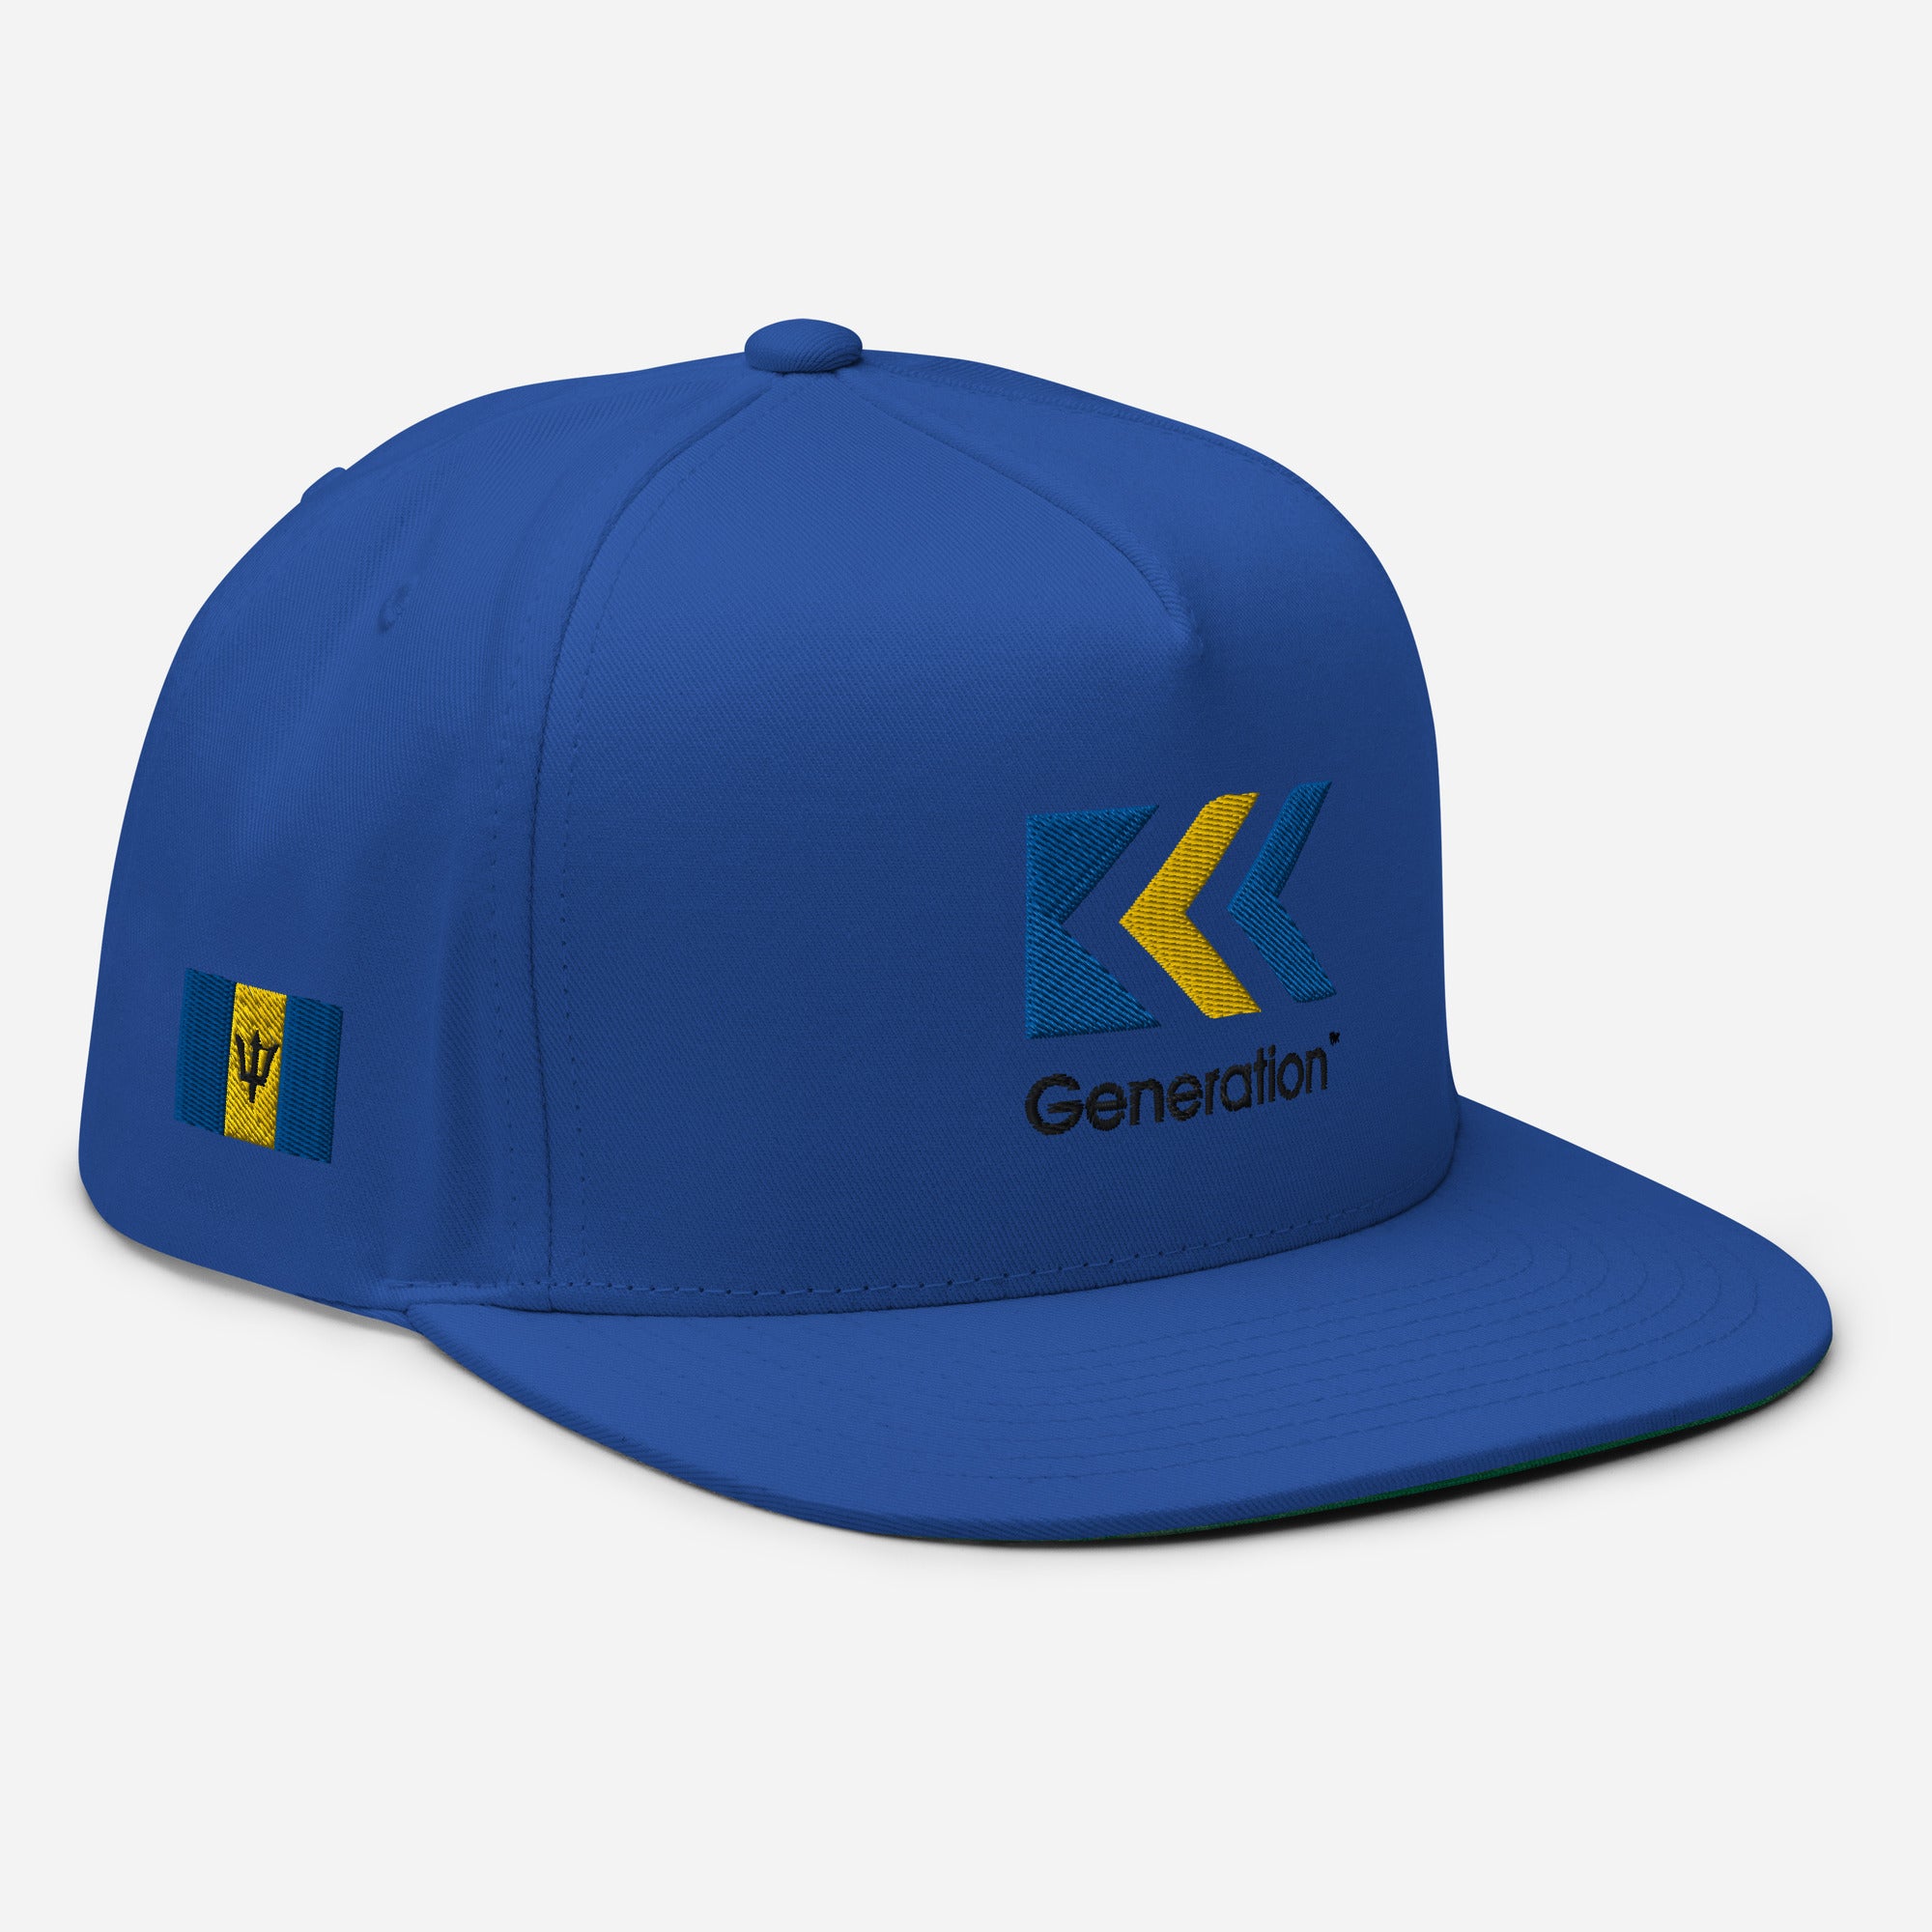 🌎 Worldwide KKKG Hats